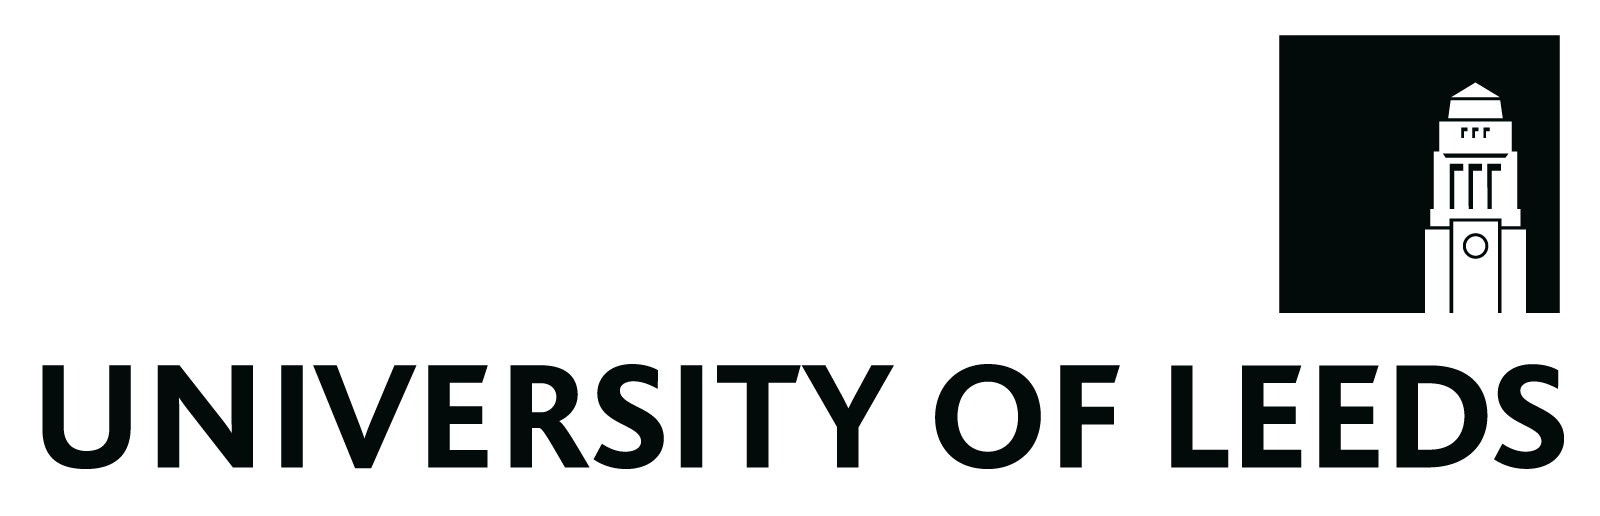 Leeds University logo.png